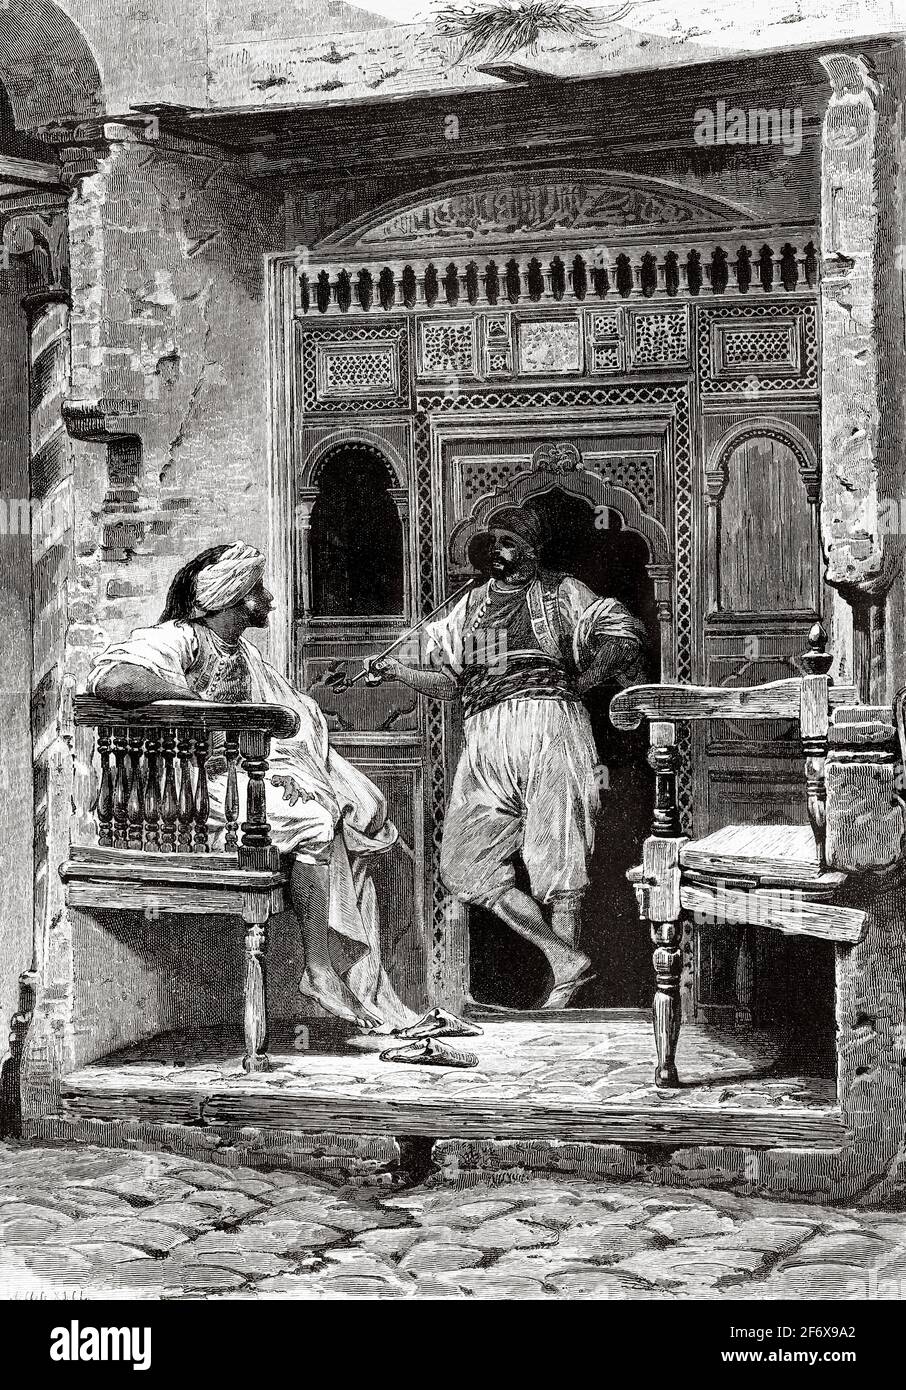 Tunisian barber shop, Tunis. North of Africa. Old 19th century engraved illustration from El Mundo Ilustrado 1879 Stock Photo